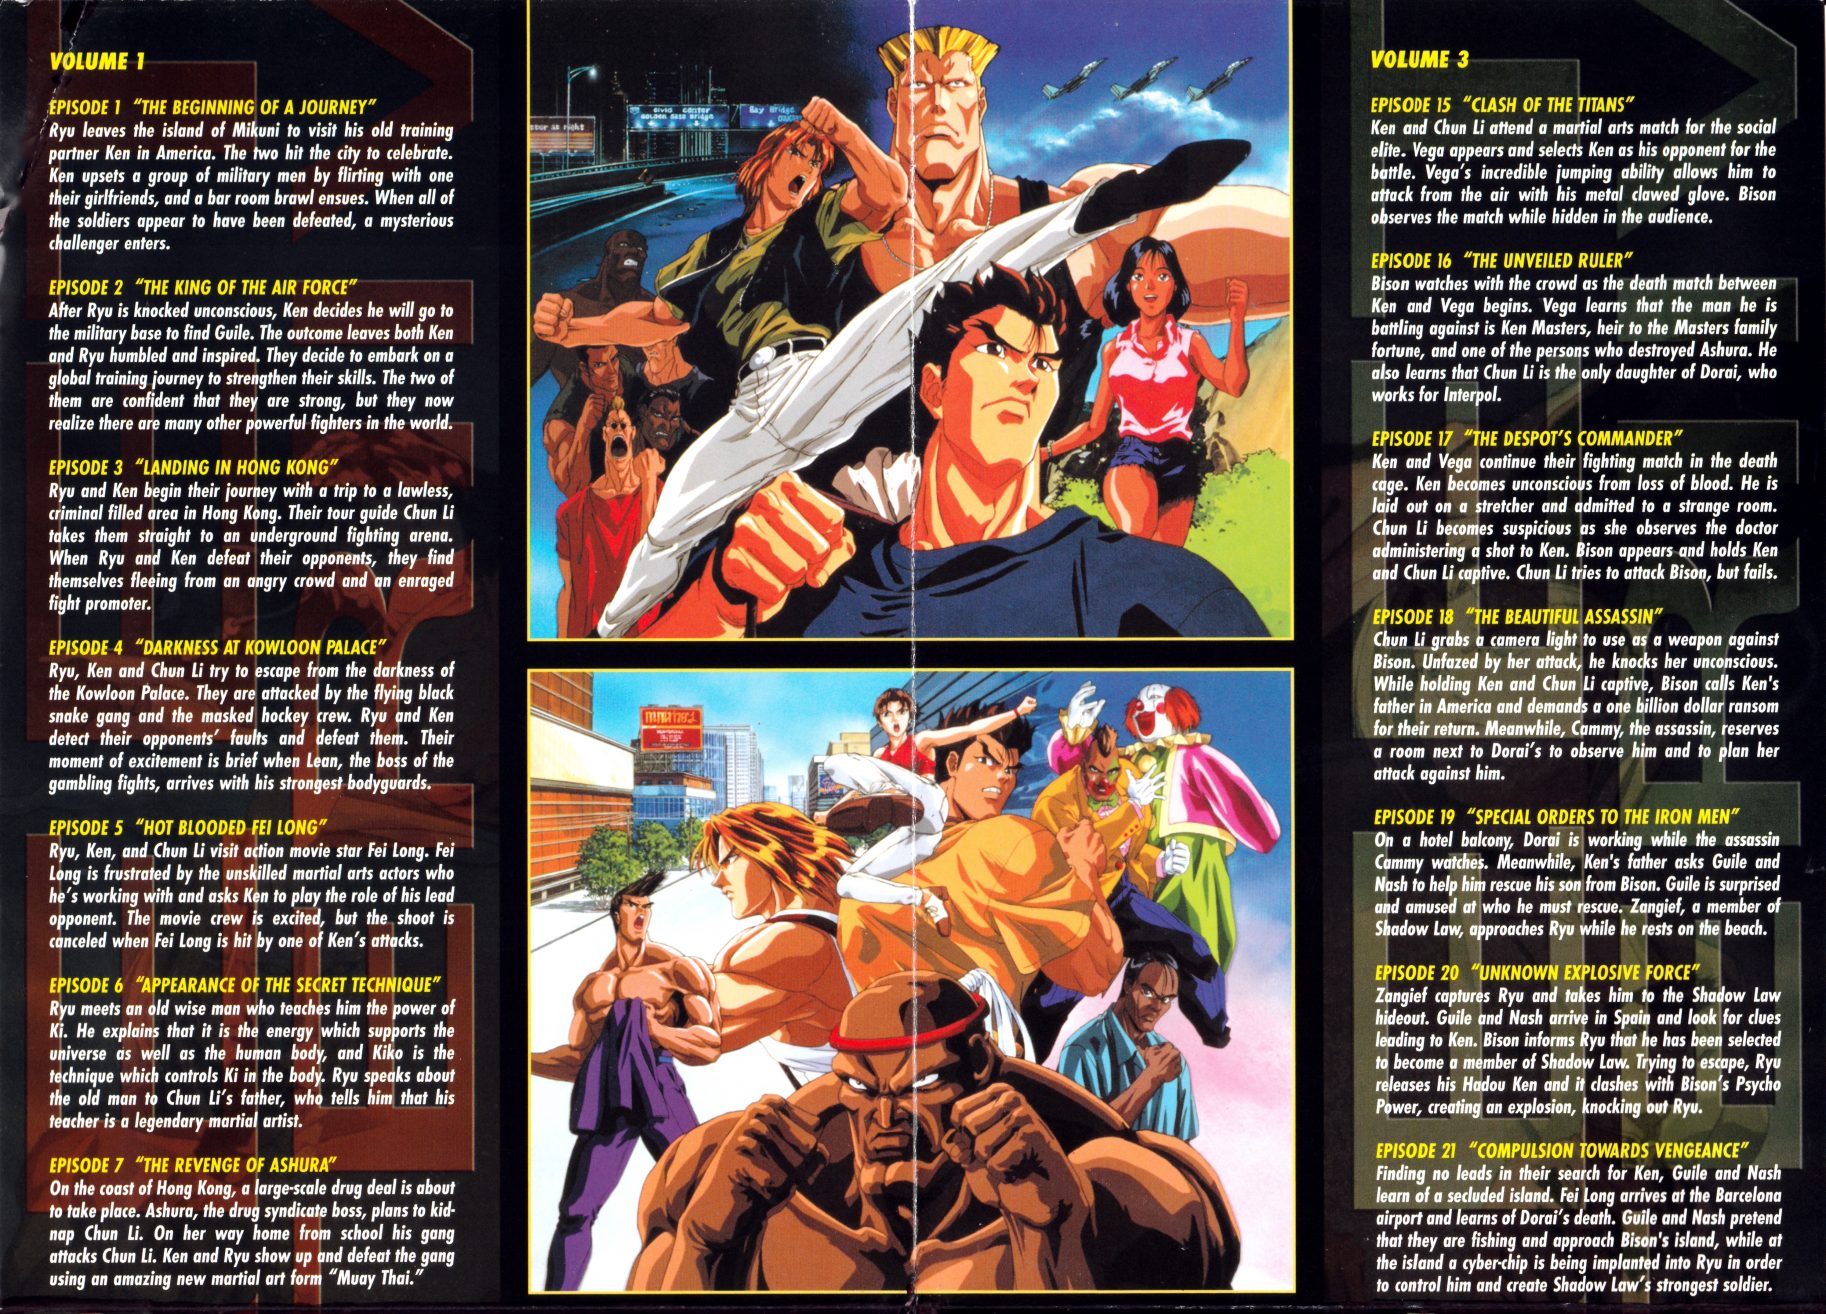 Street Fighter II: V - DVD PLANET STORE